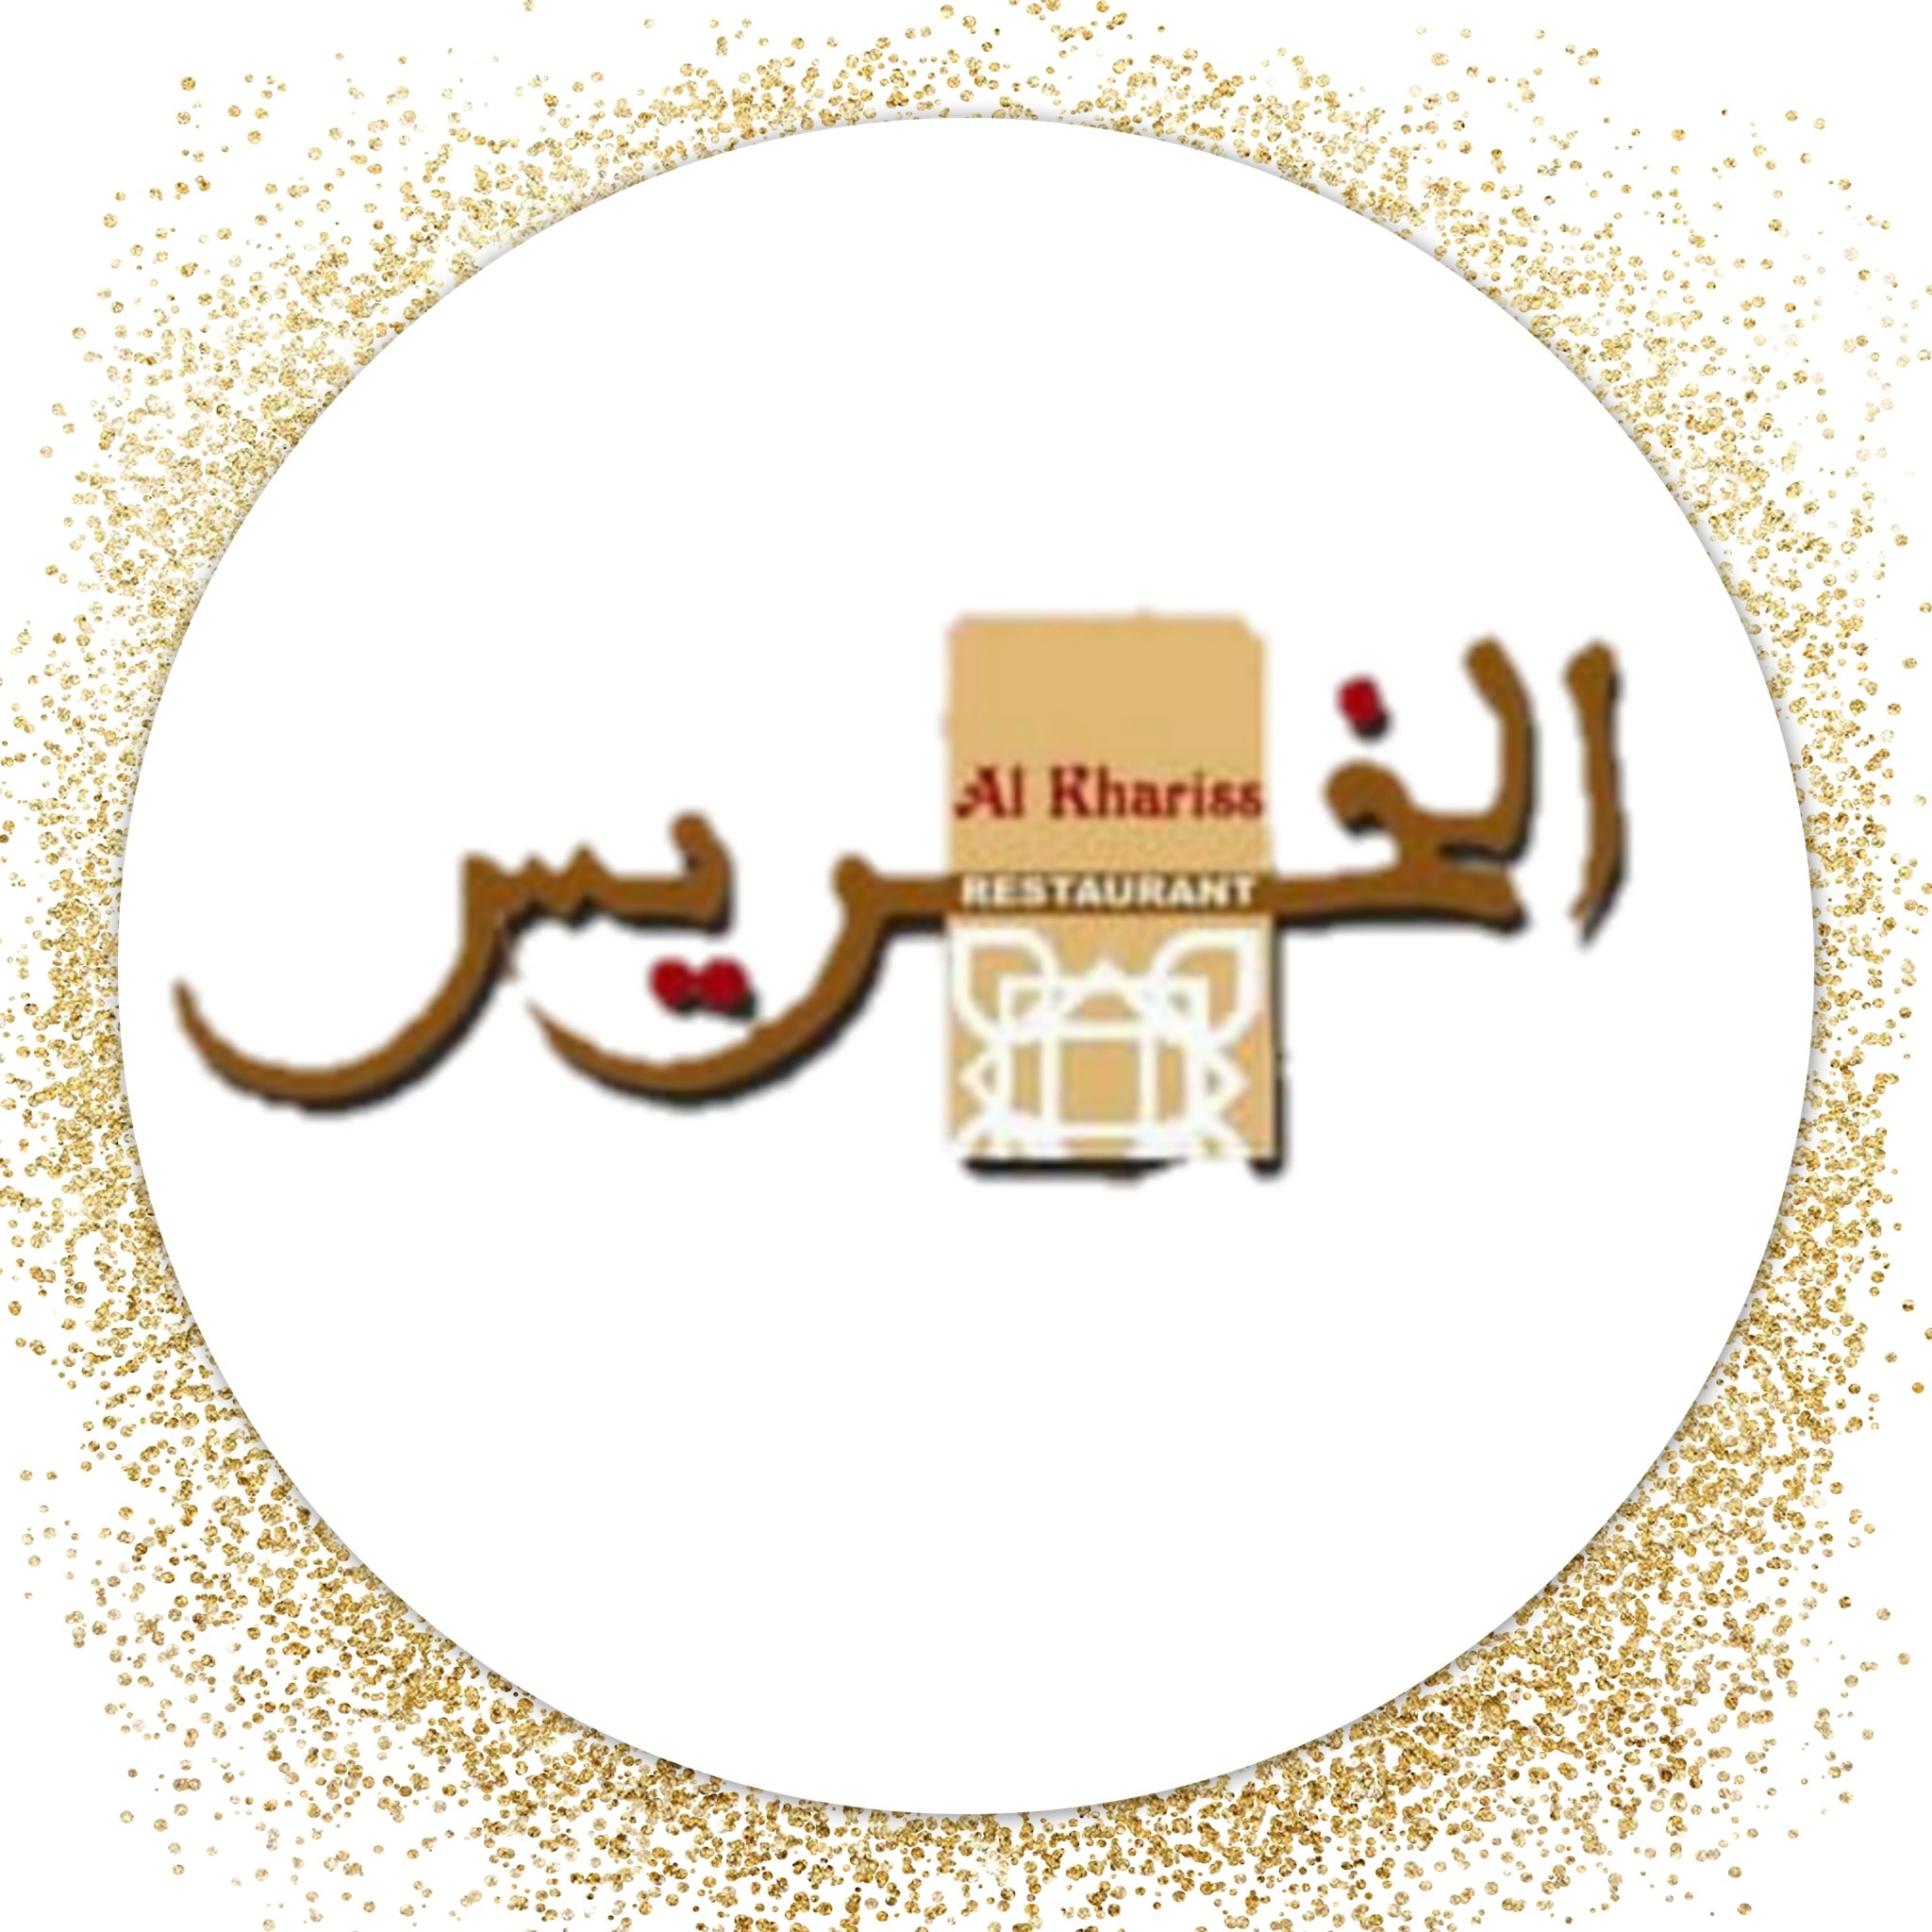 Image result for Al Khariss Hotel